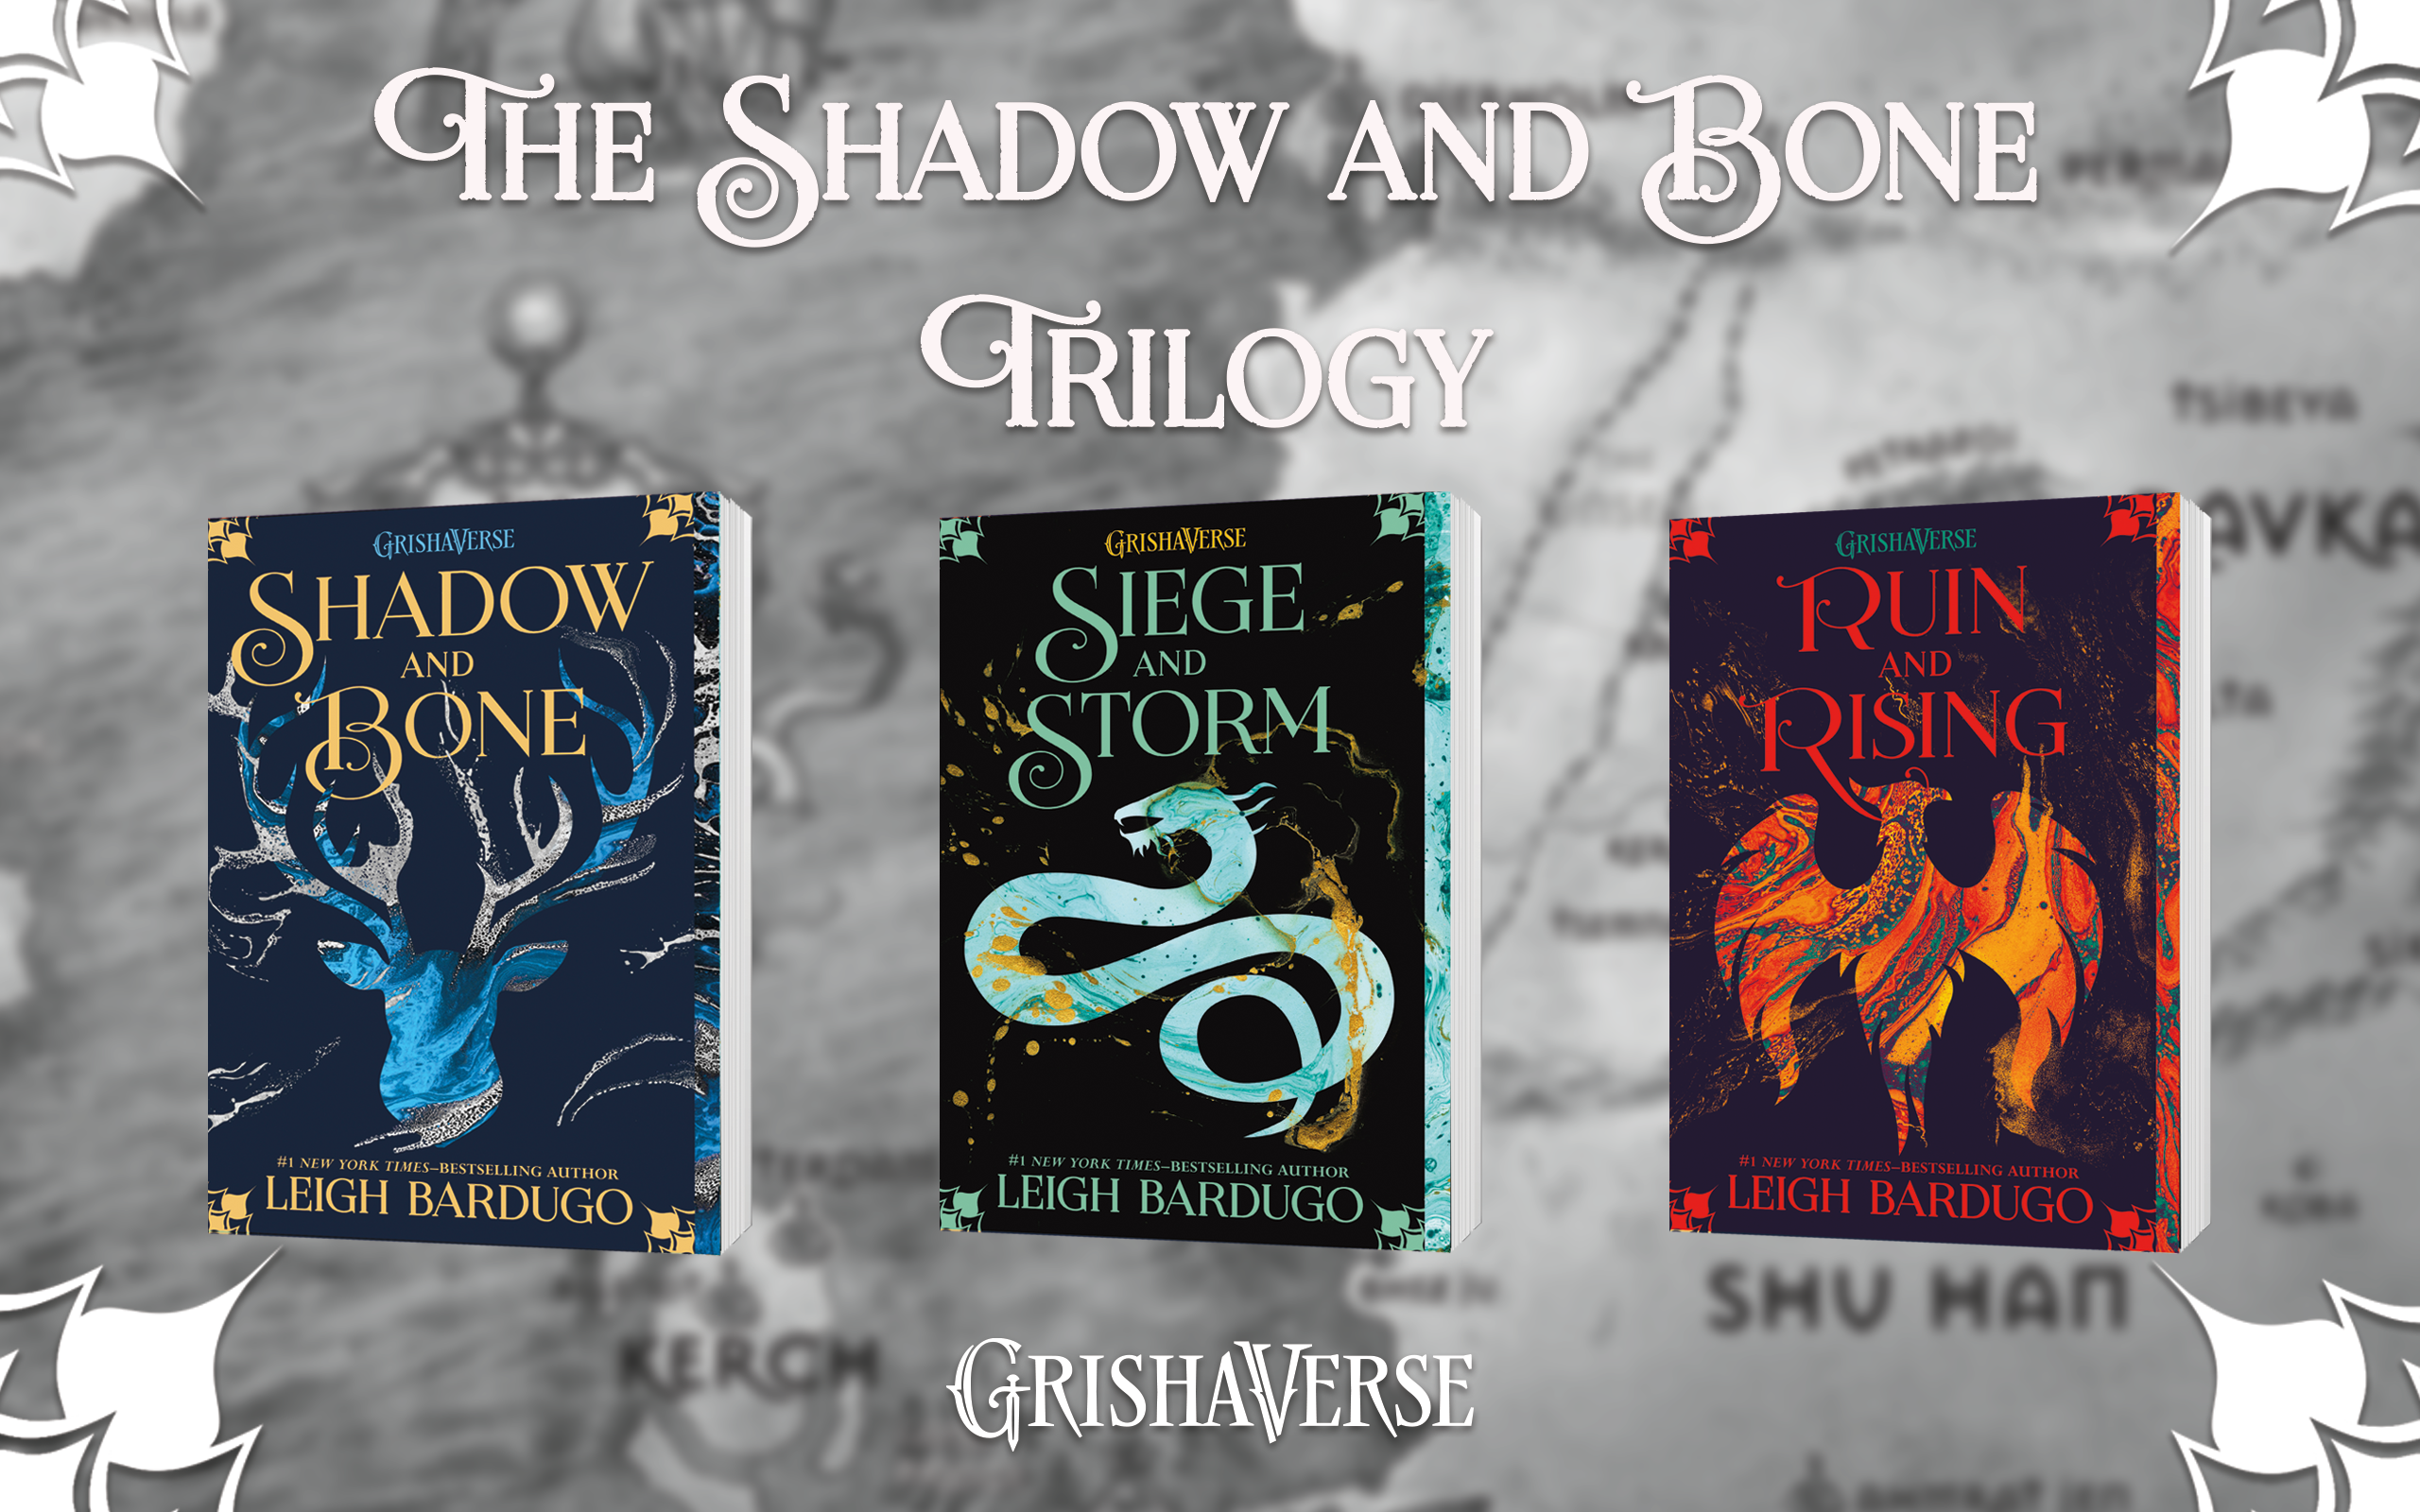 the grishaverse trilogy